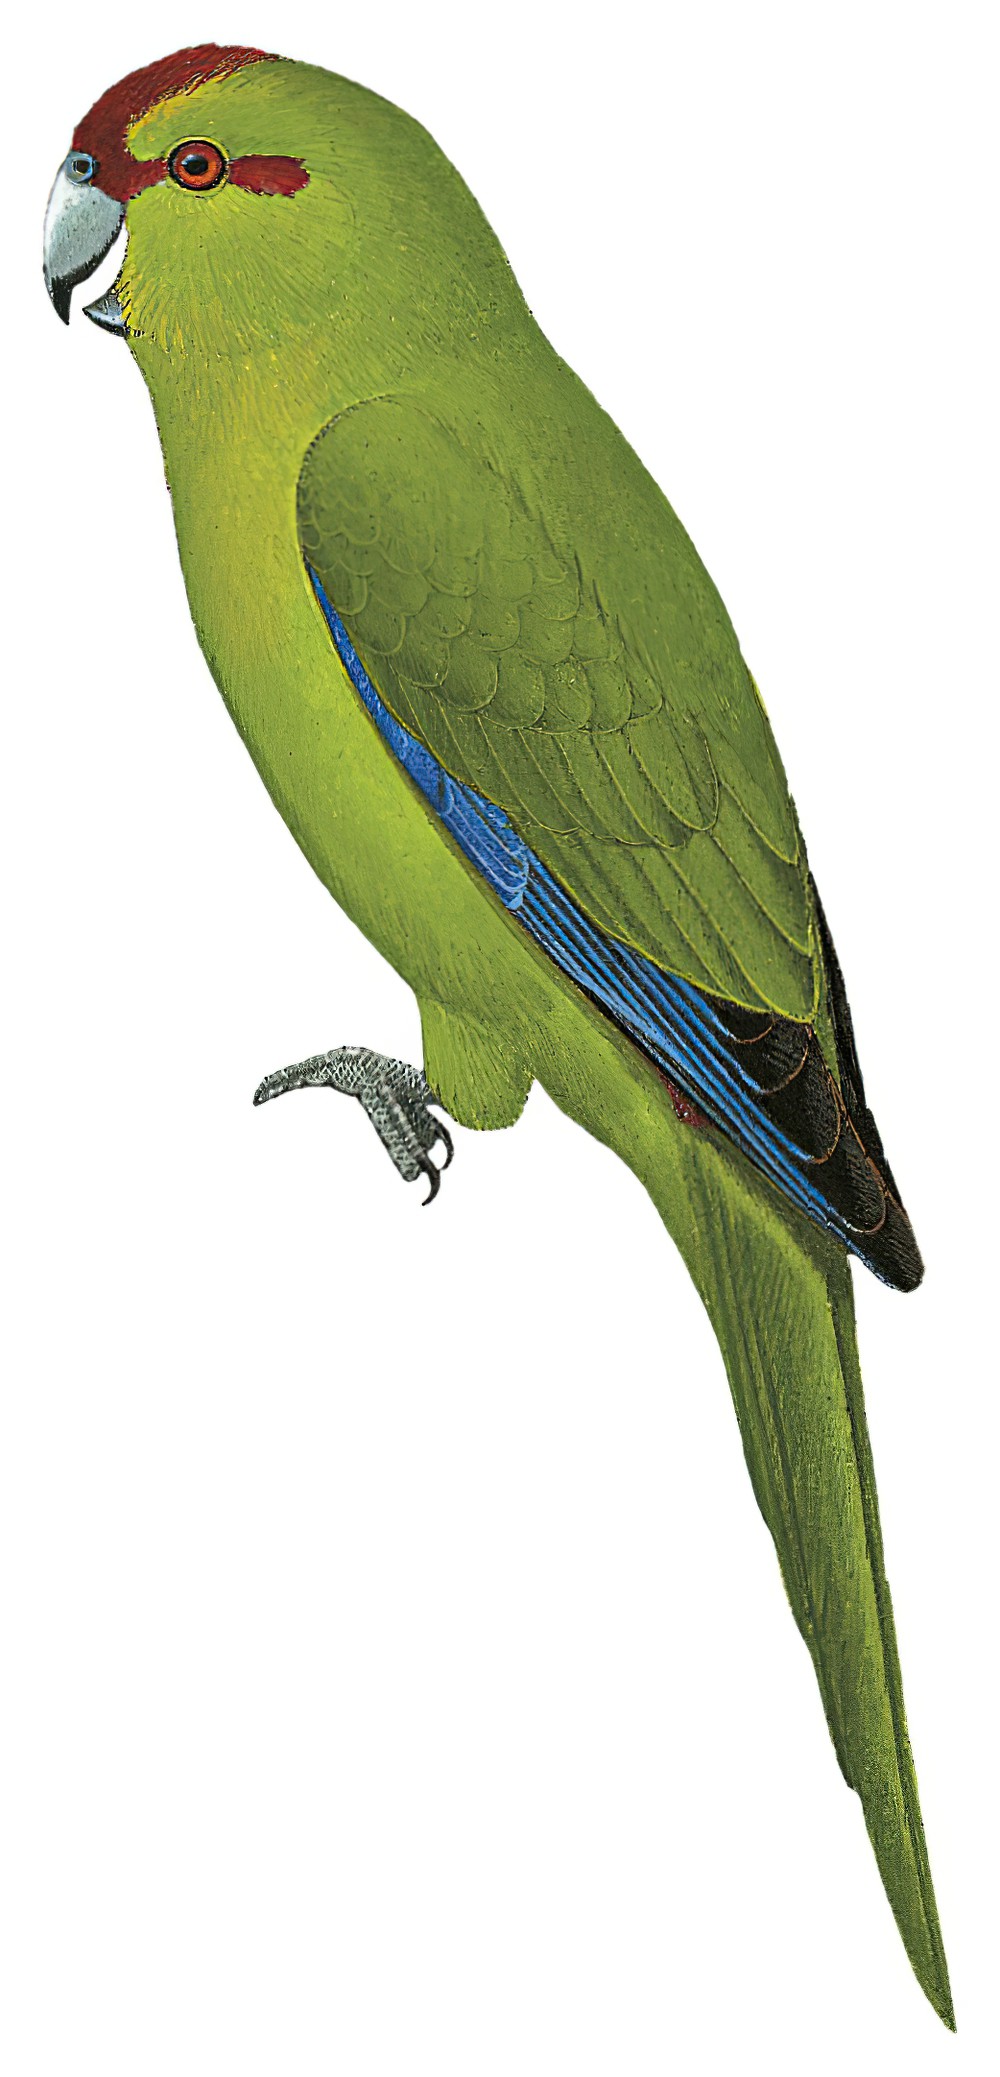 Norfolk Island Parakeet / Cyanoramphus cookii